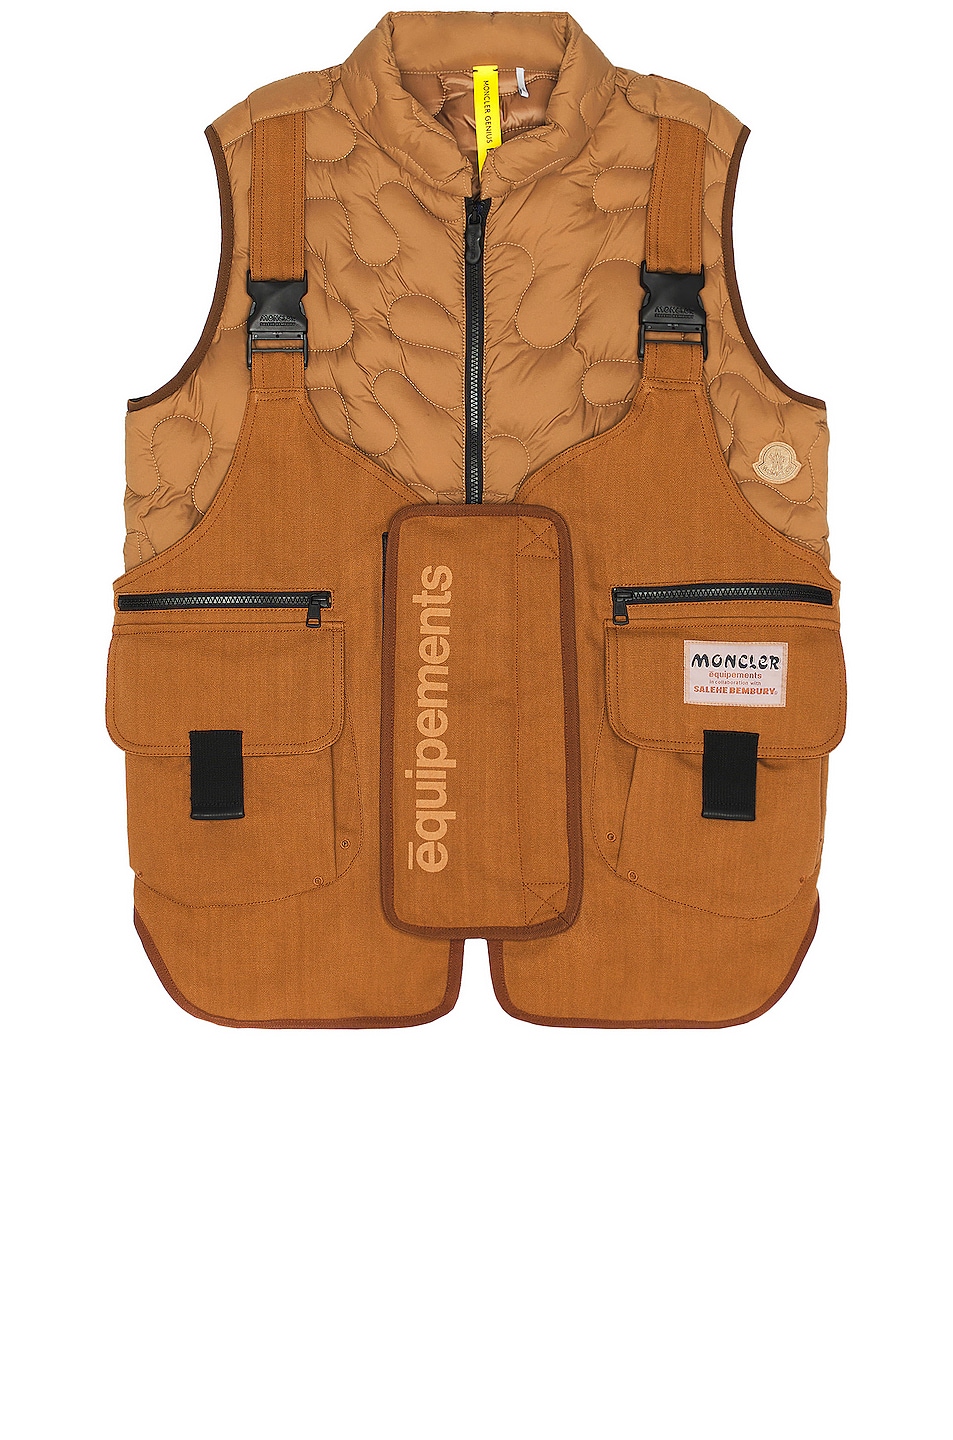 Image 1 of Moncler Genius Moncler x Salehe Bembury Sierpinski Vest in Brown